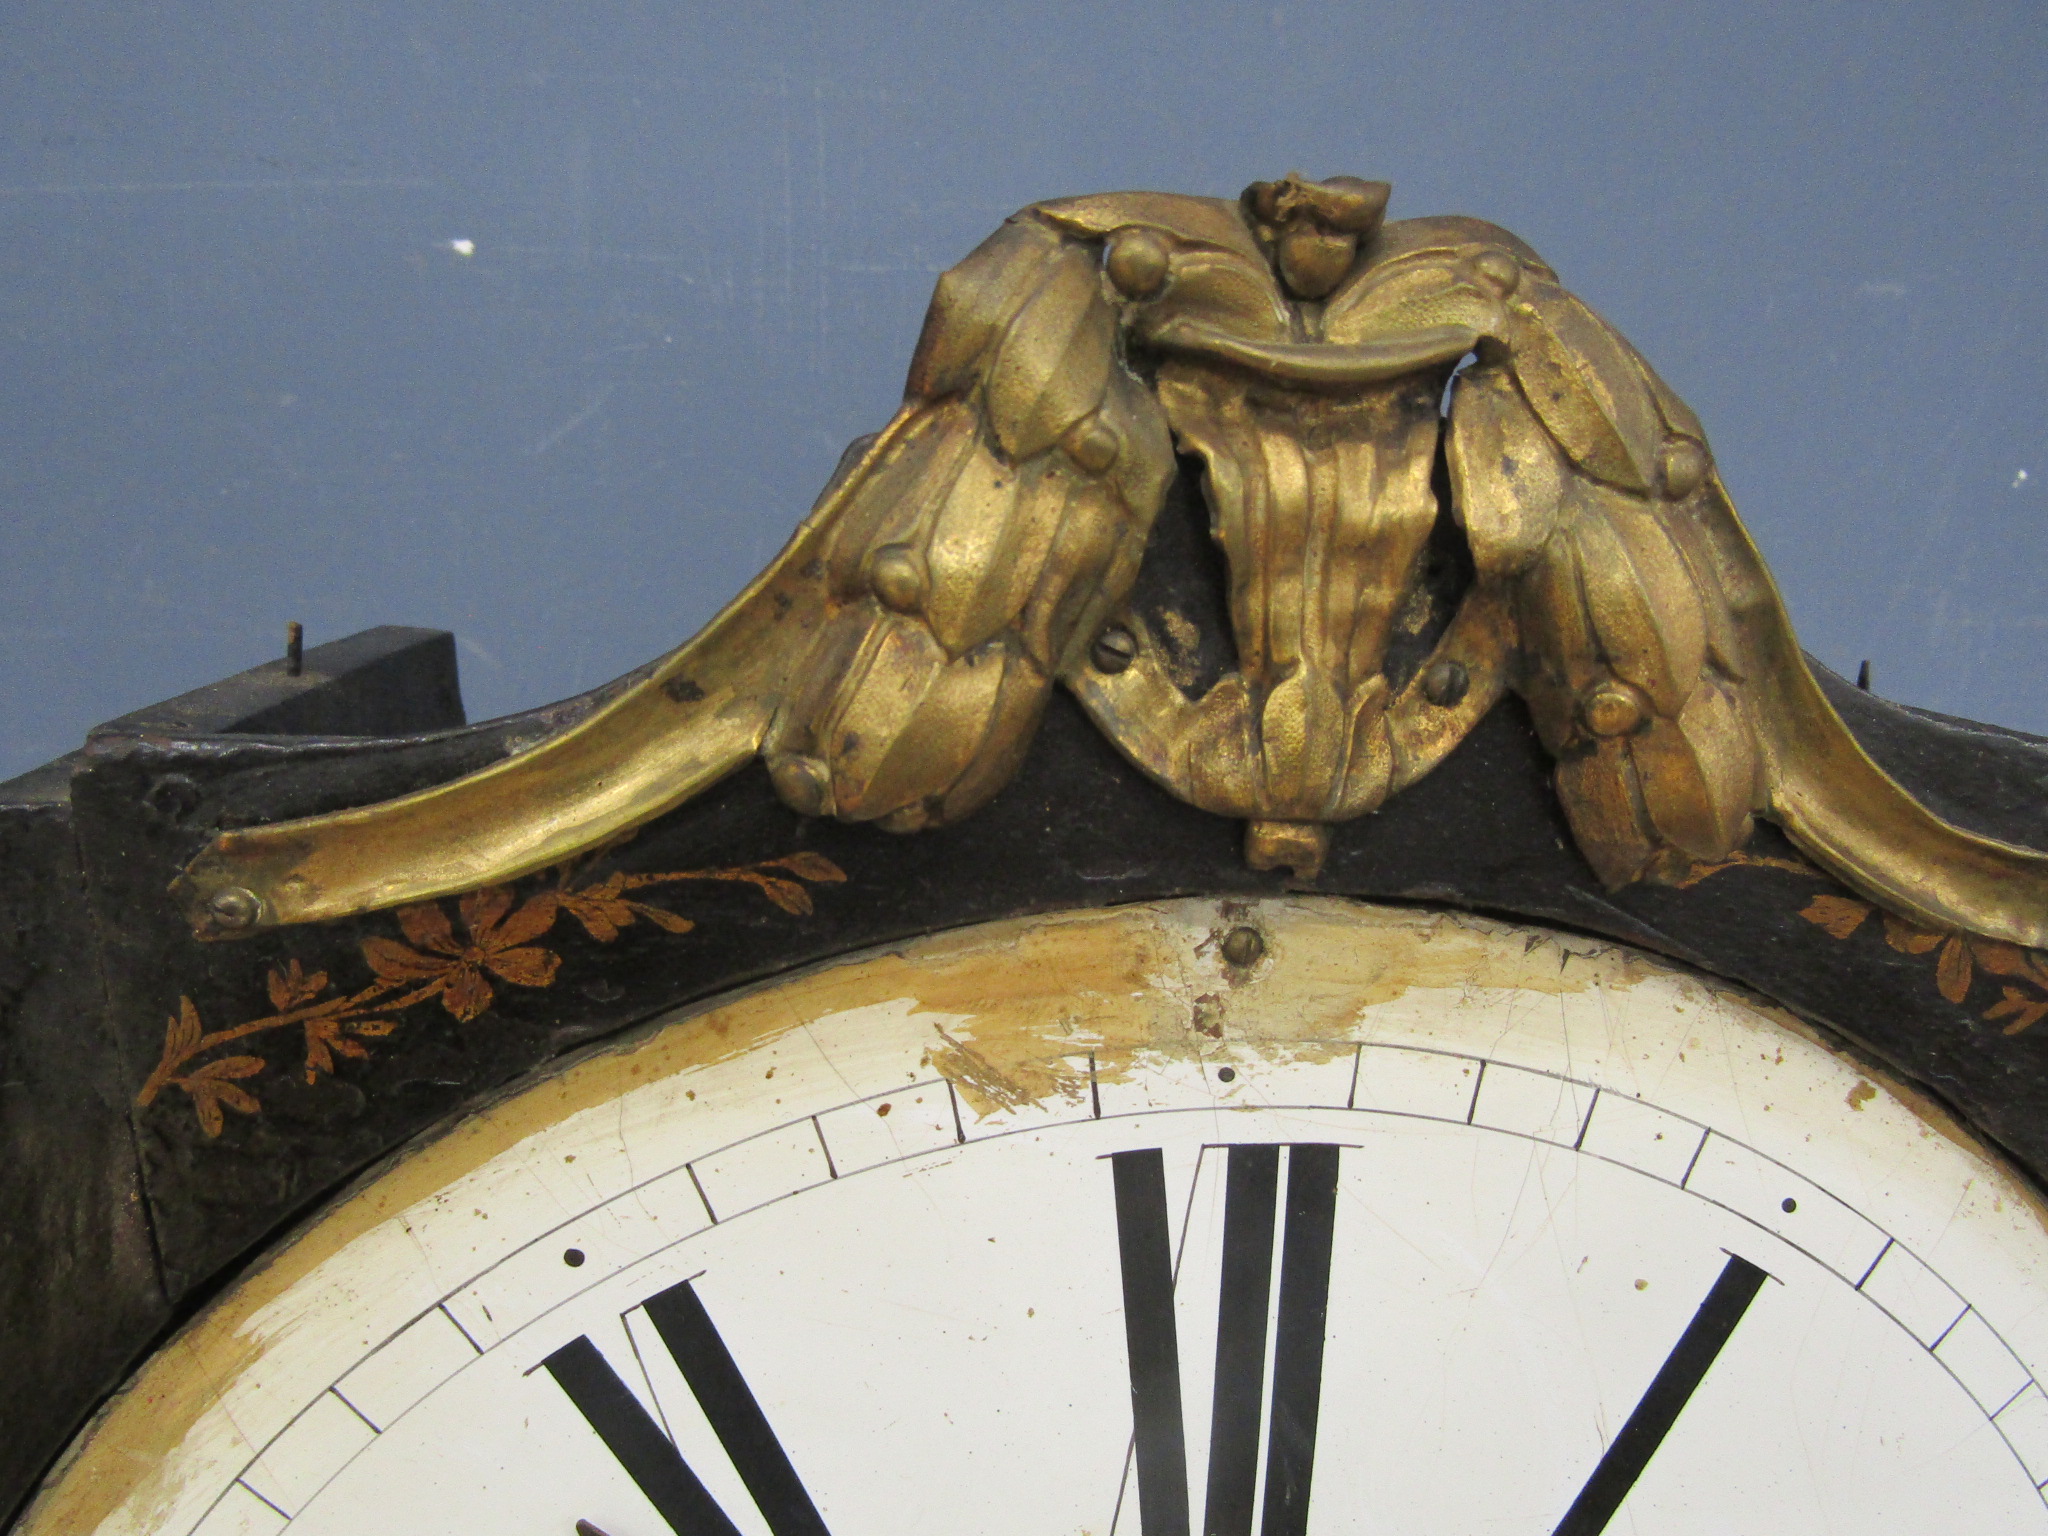 19th Century Swiss style striking bracket clock with Ormolu decoration, pendulum and key (needs some - Image 3 of 10